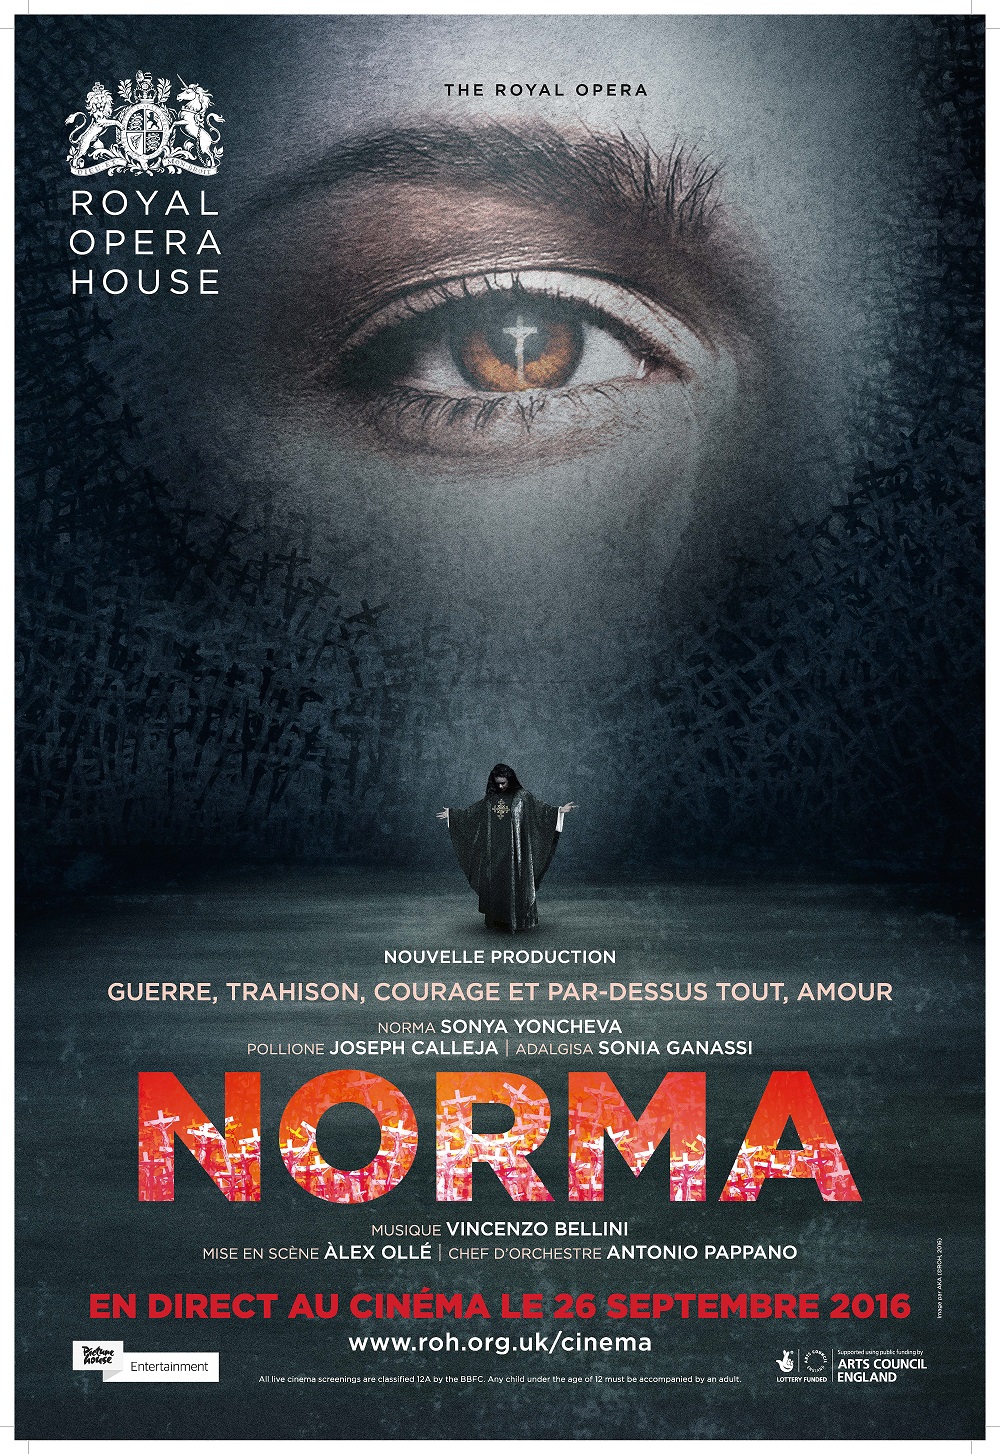 Norma (Royal Opera House)